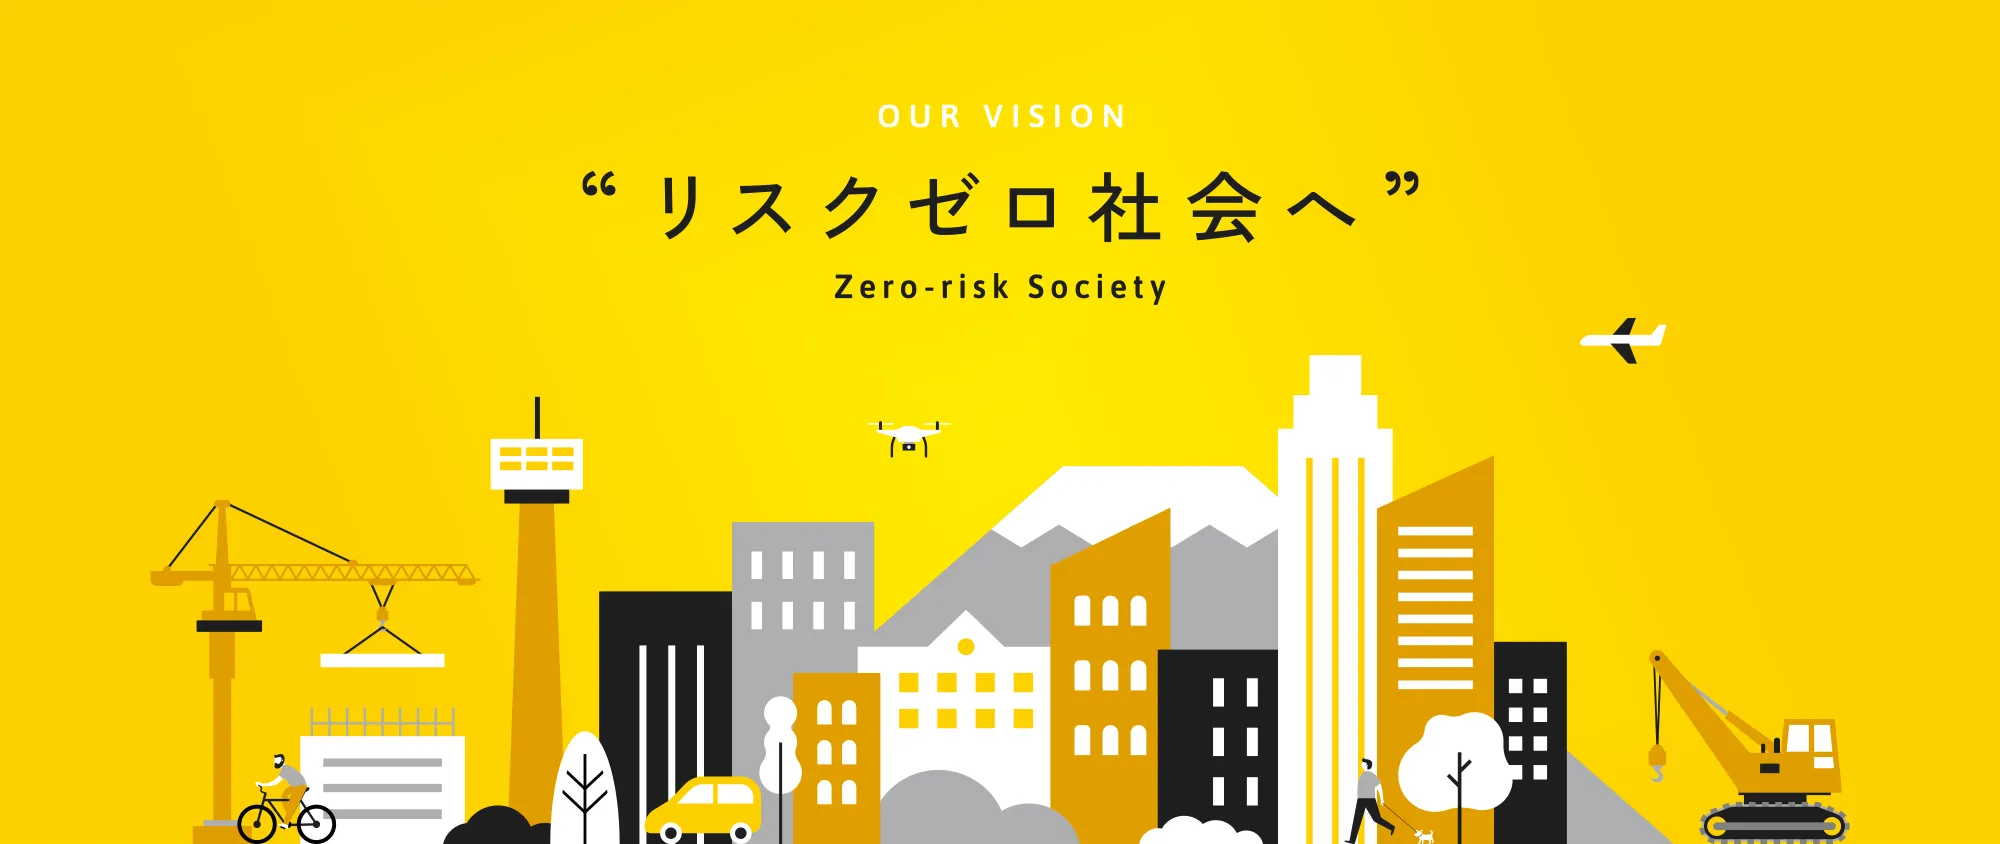 OUR VISION リスクゼロ社会へ Zero-risk society